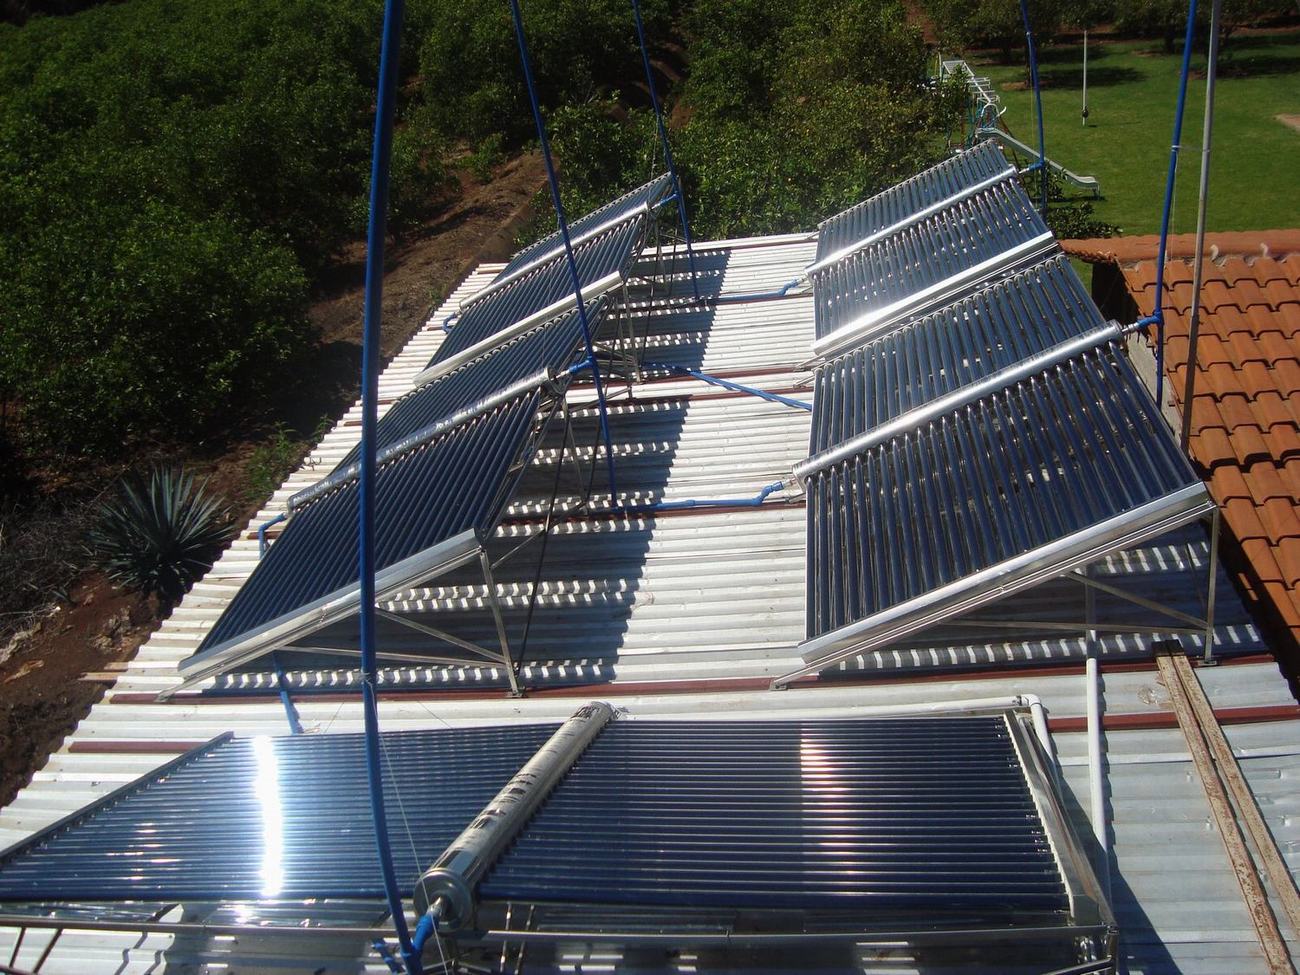 Project Type Commercial Split Solar Water Heater